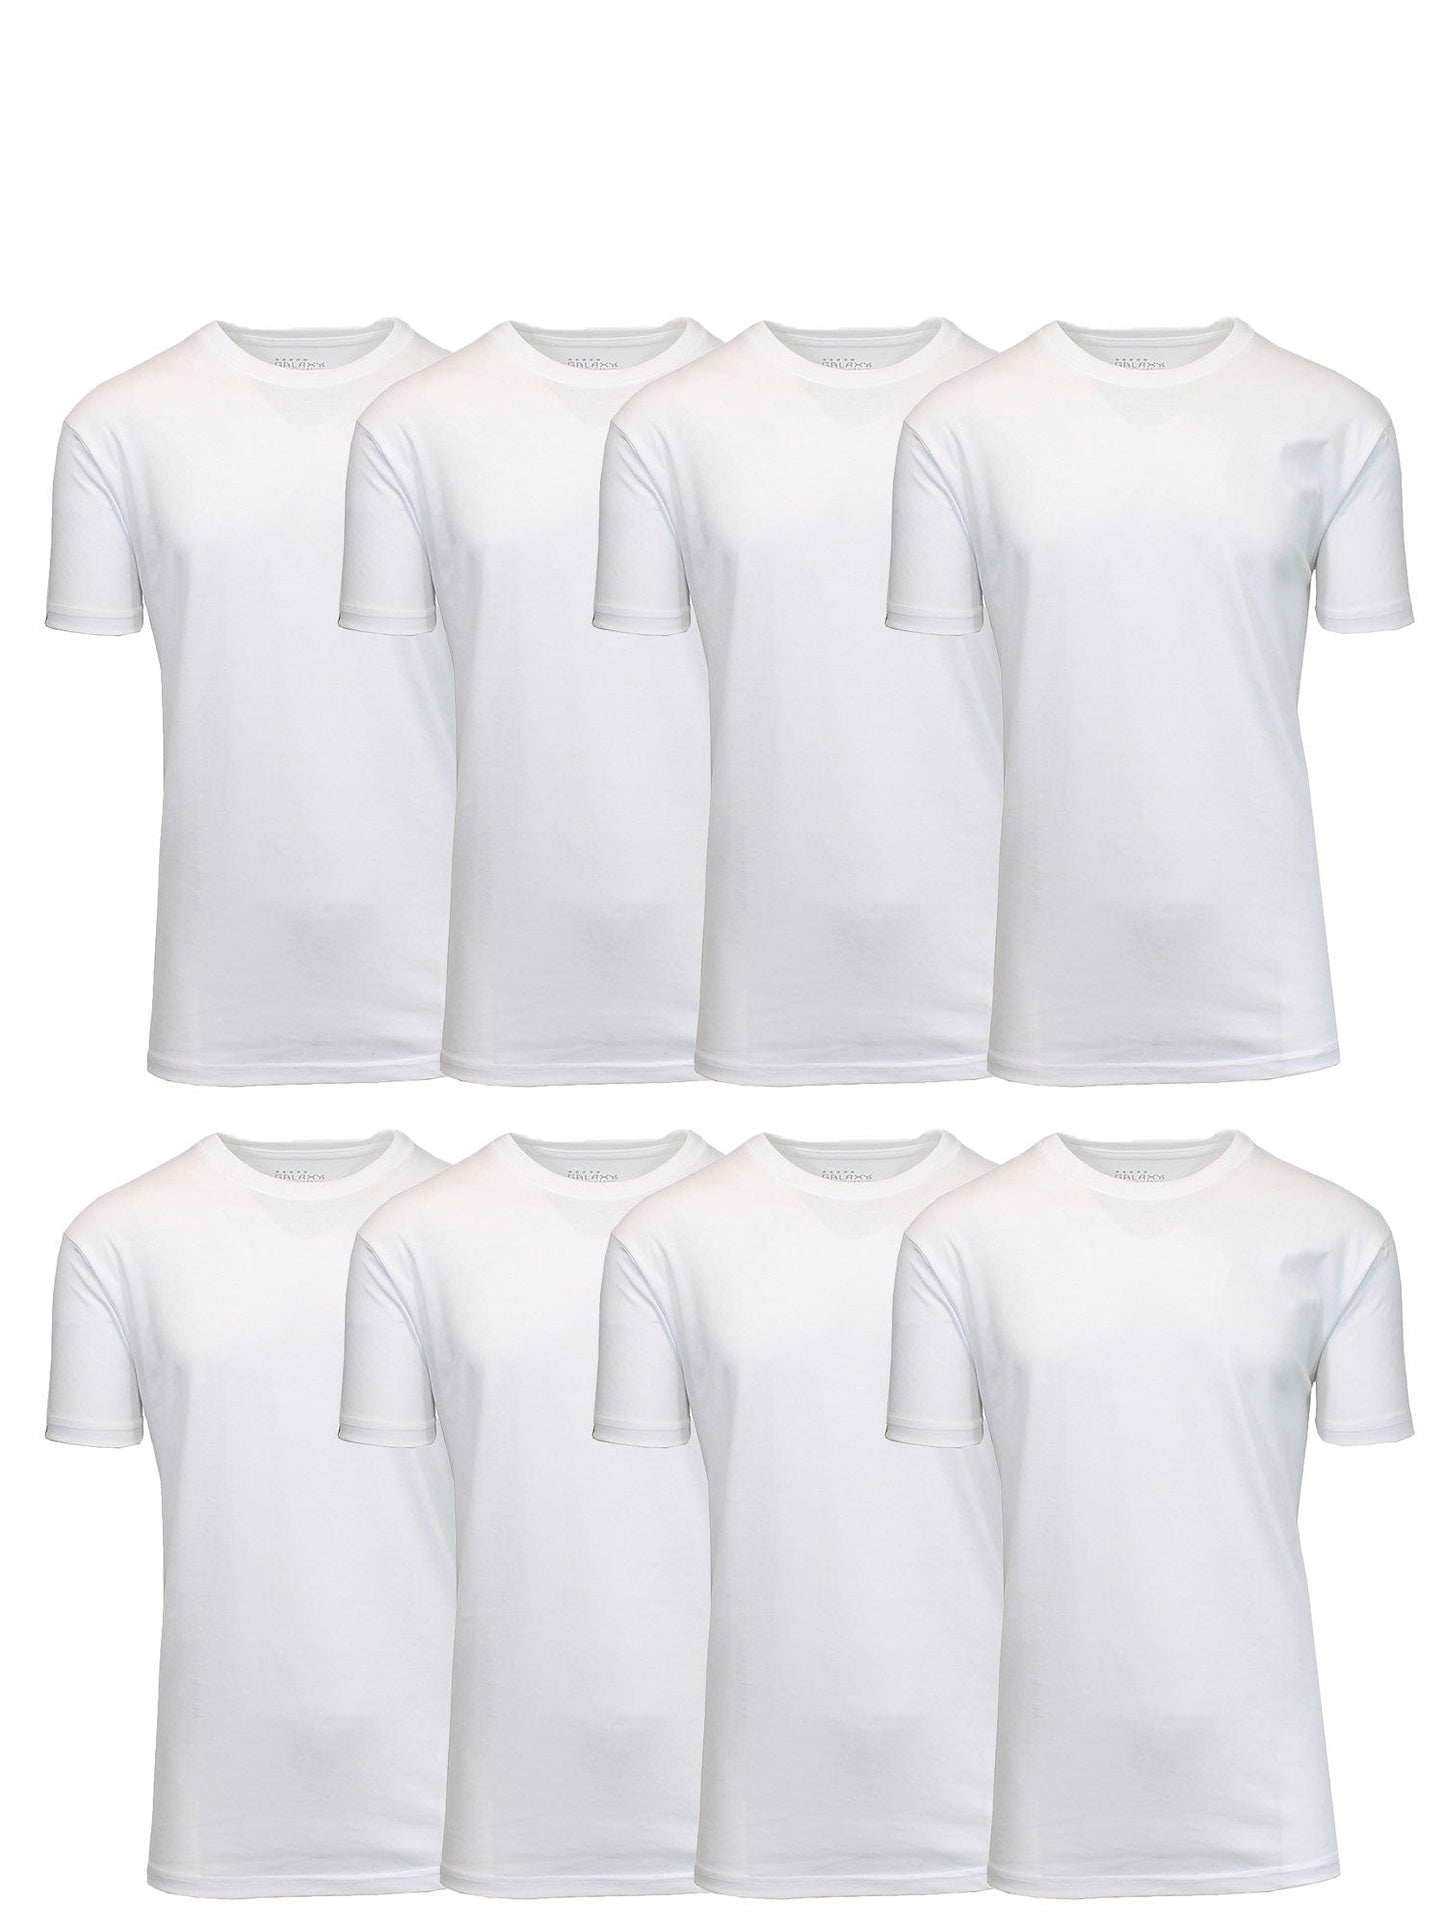 Camiseta clásica de mezcla de algodón de manga corta con cuello redondo para hombre (S-3XL), paquete de 8 